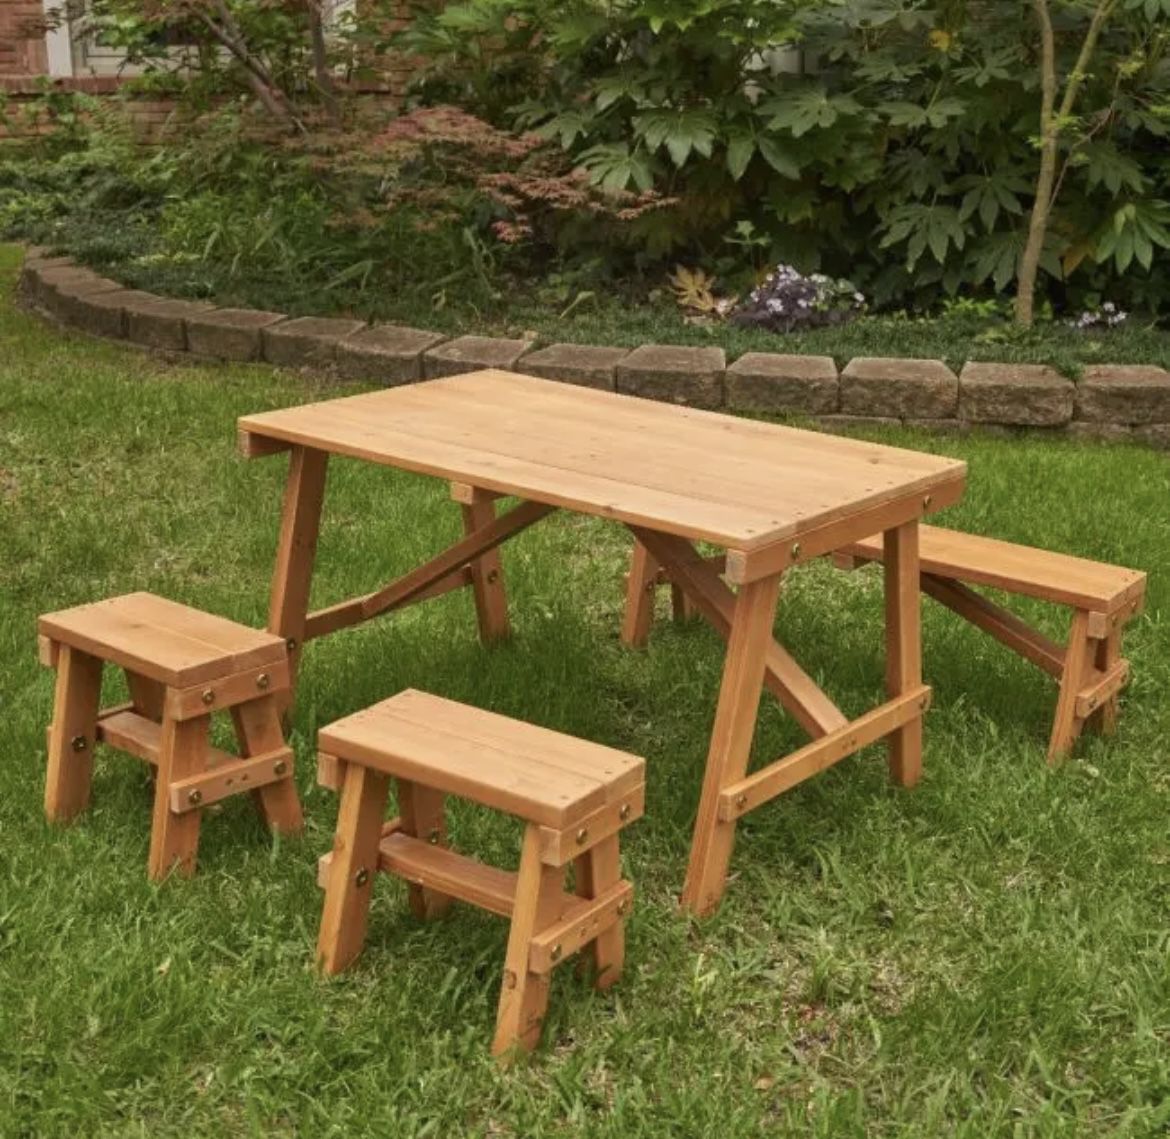 KidKraft Wooden Outdoor Picnic Table Set